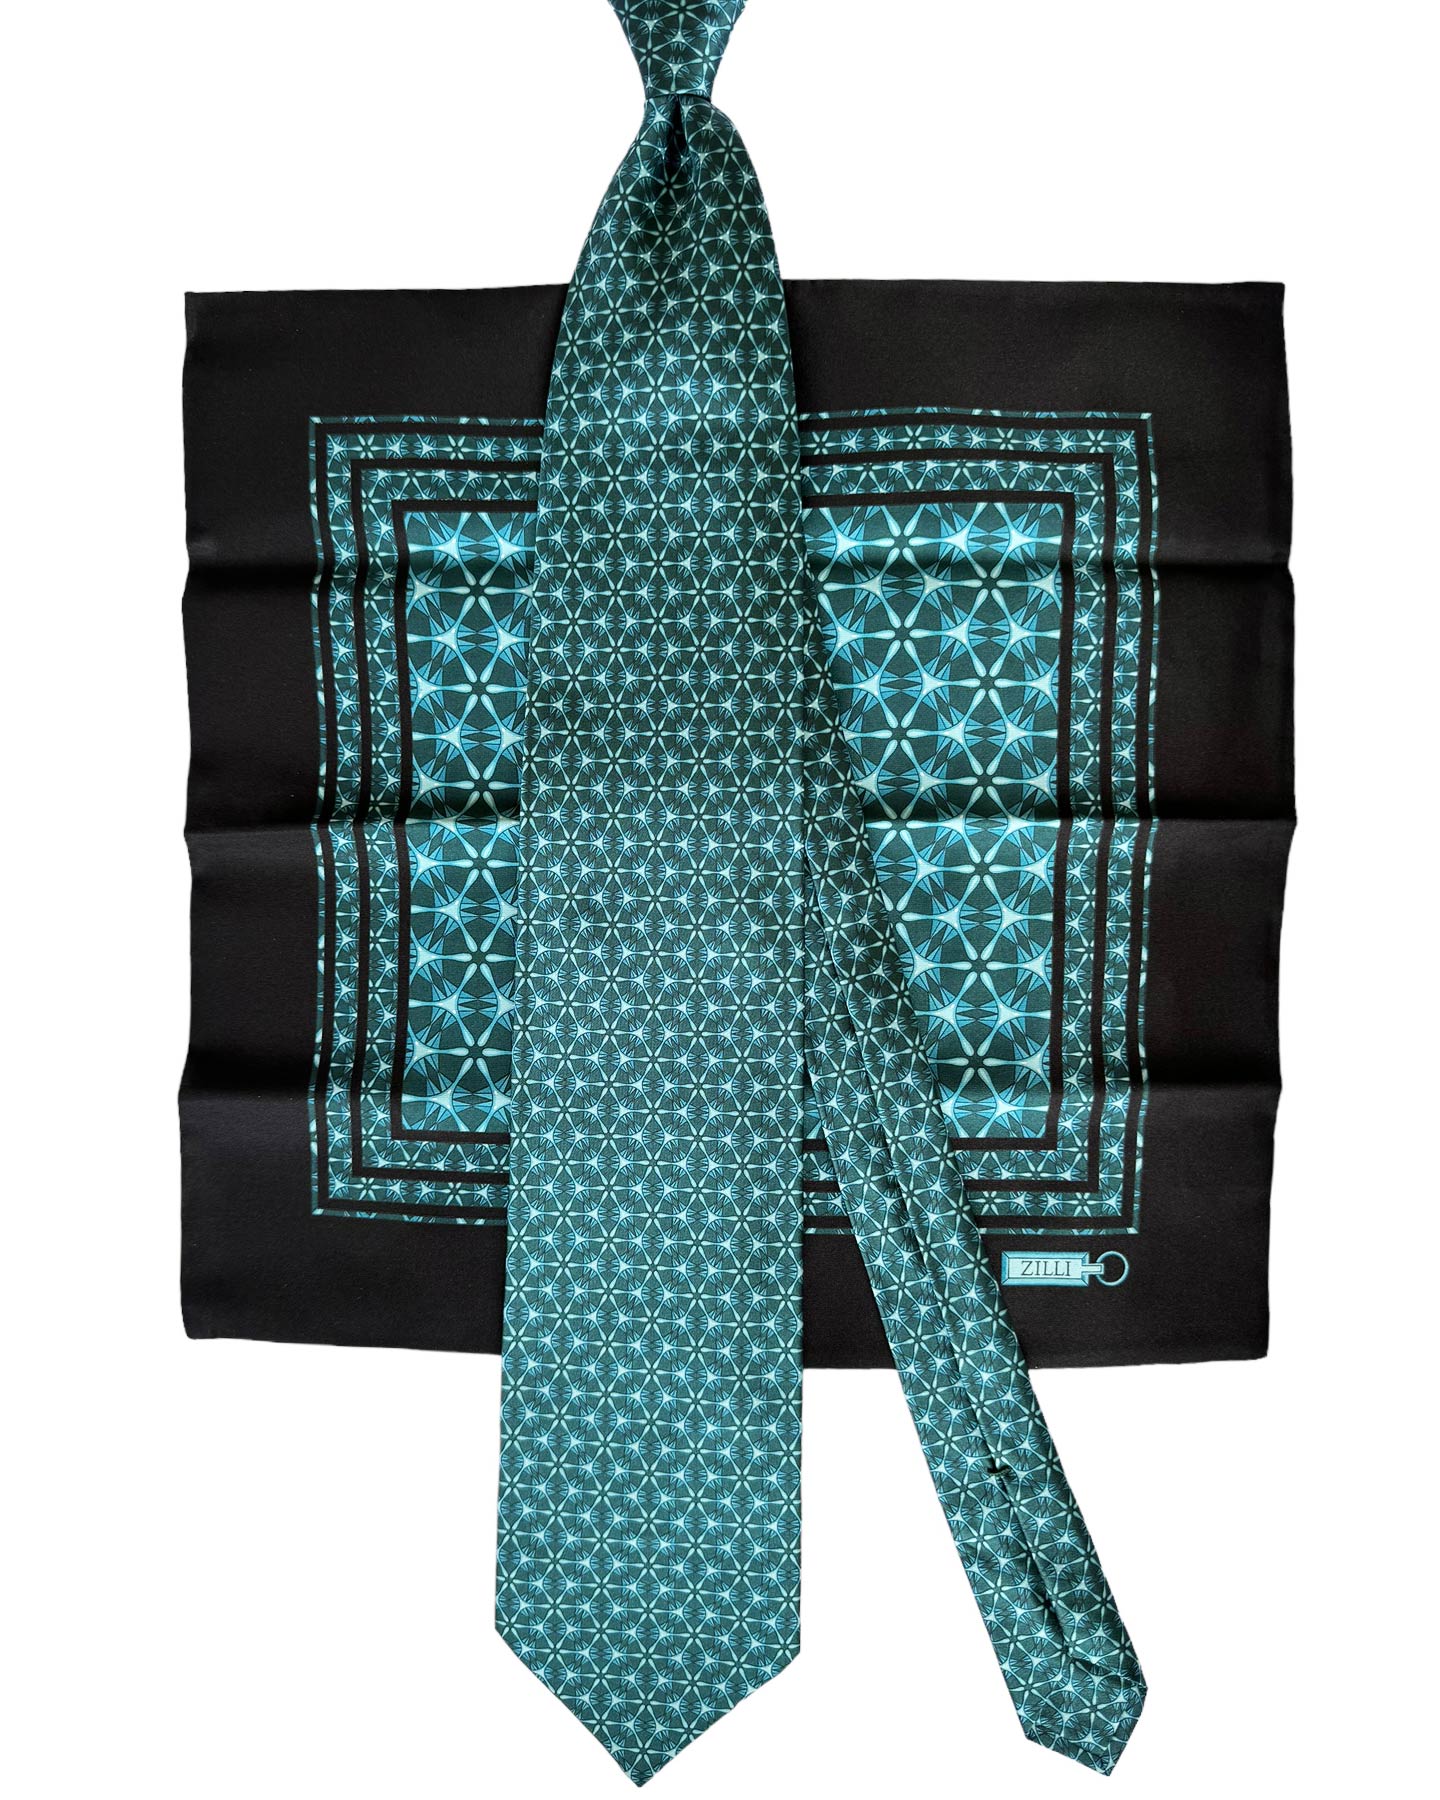 Zilli Tie & Pocket Square Set Ocean Green Blue Design